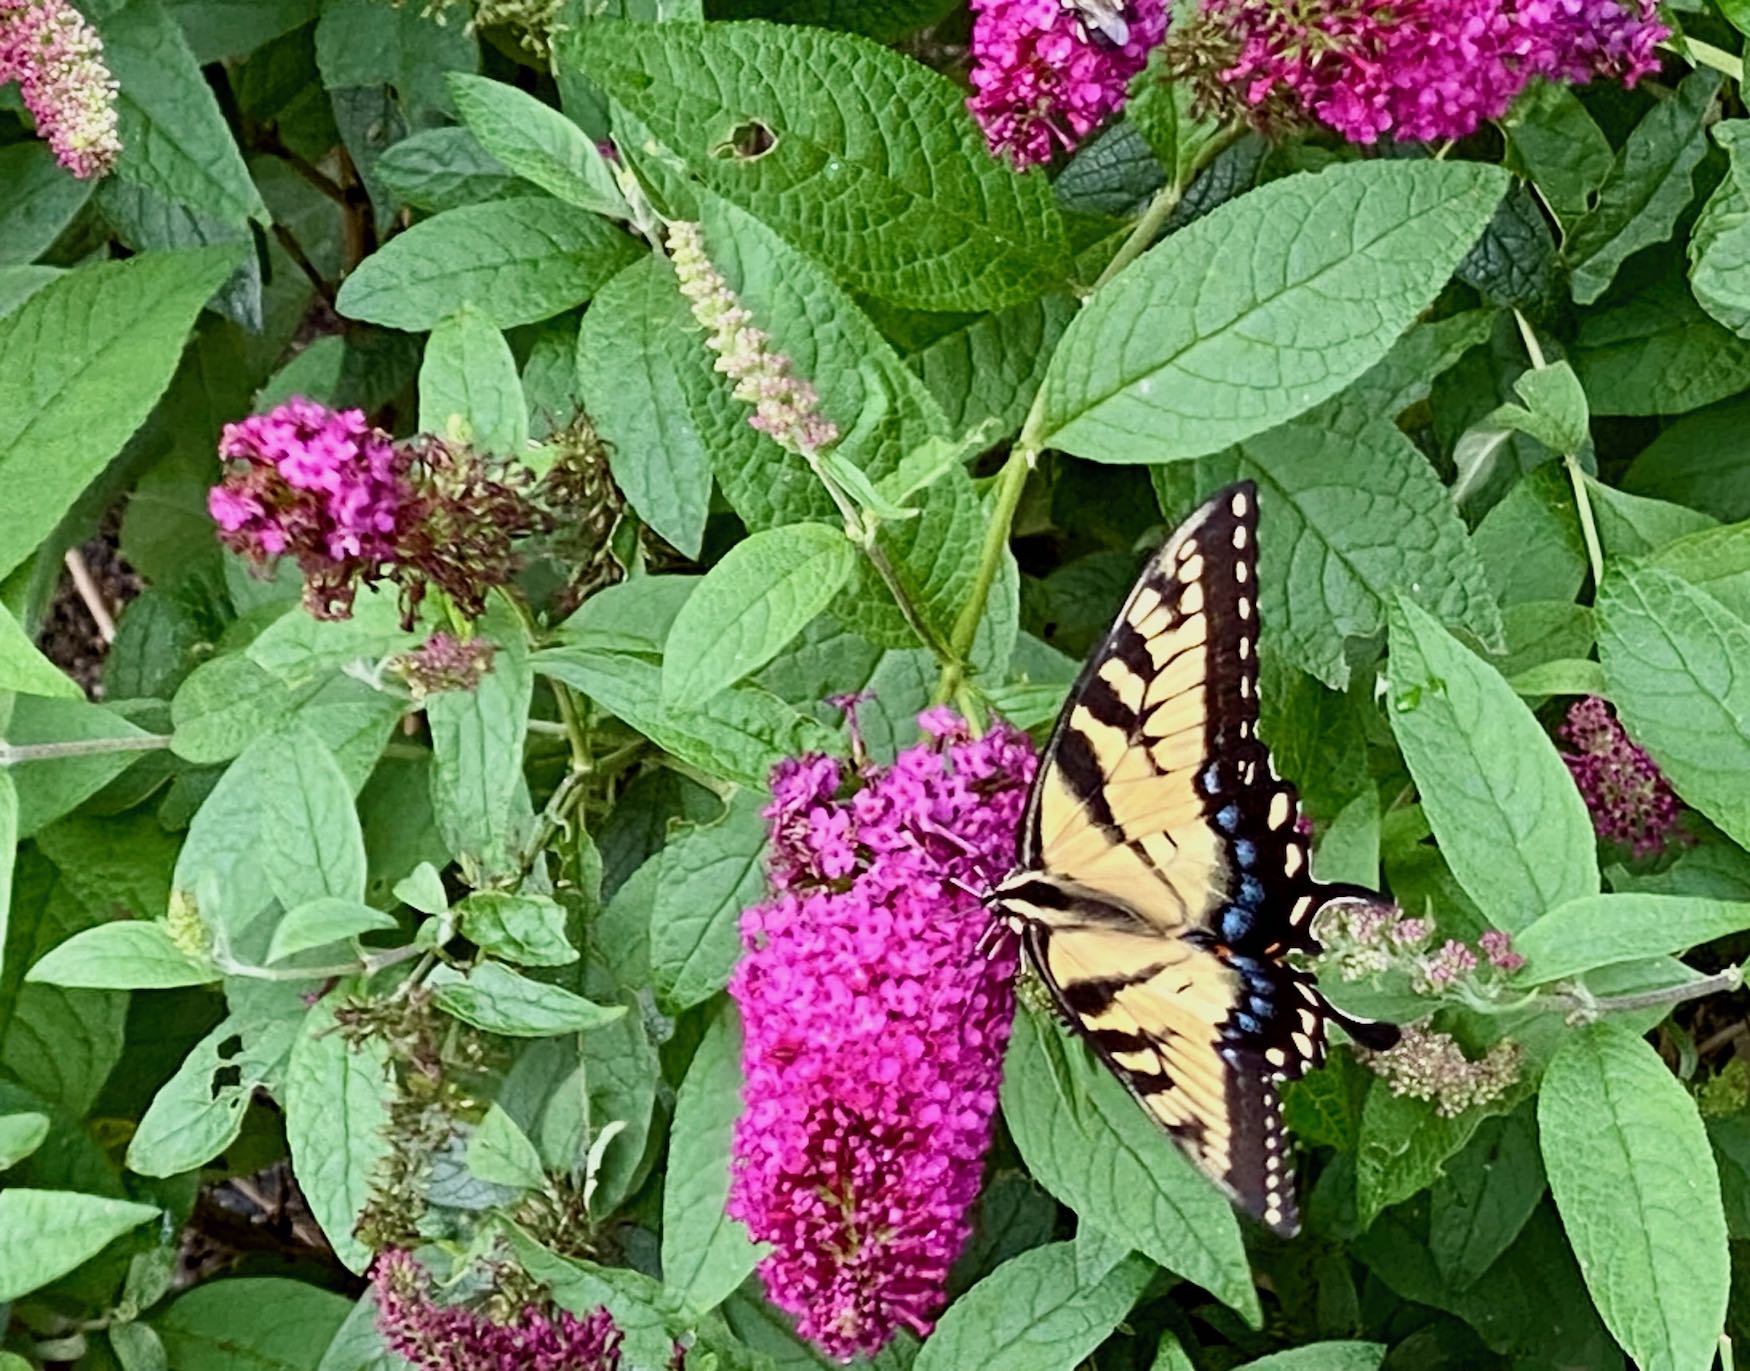 It's the weekend! Number 308, Eastern Tiger Swallowtail Butterfly on a Fuschia Butterfly Bush